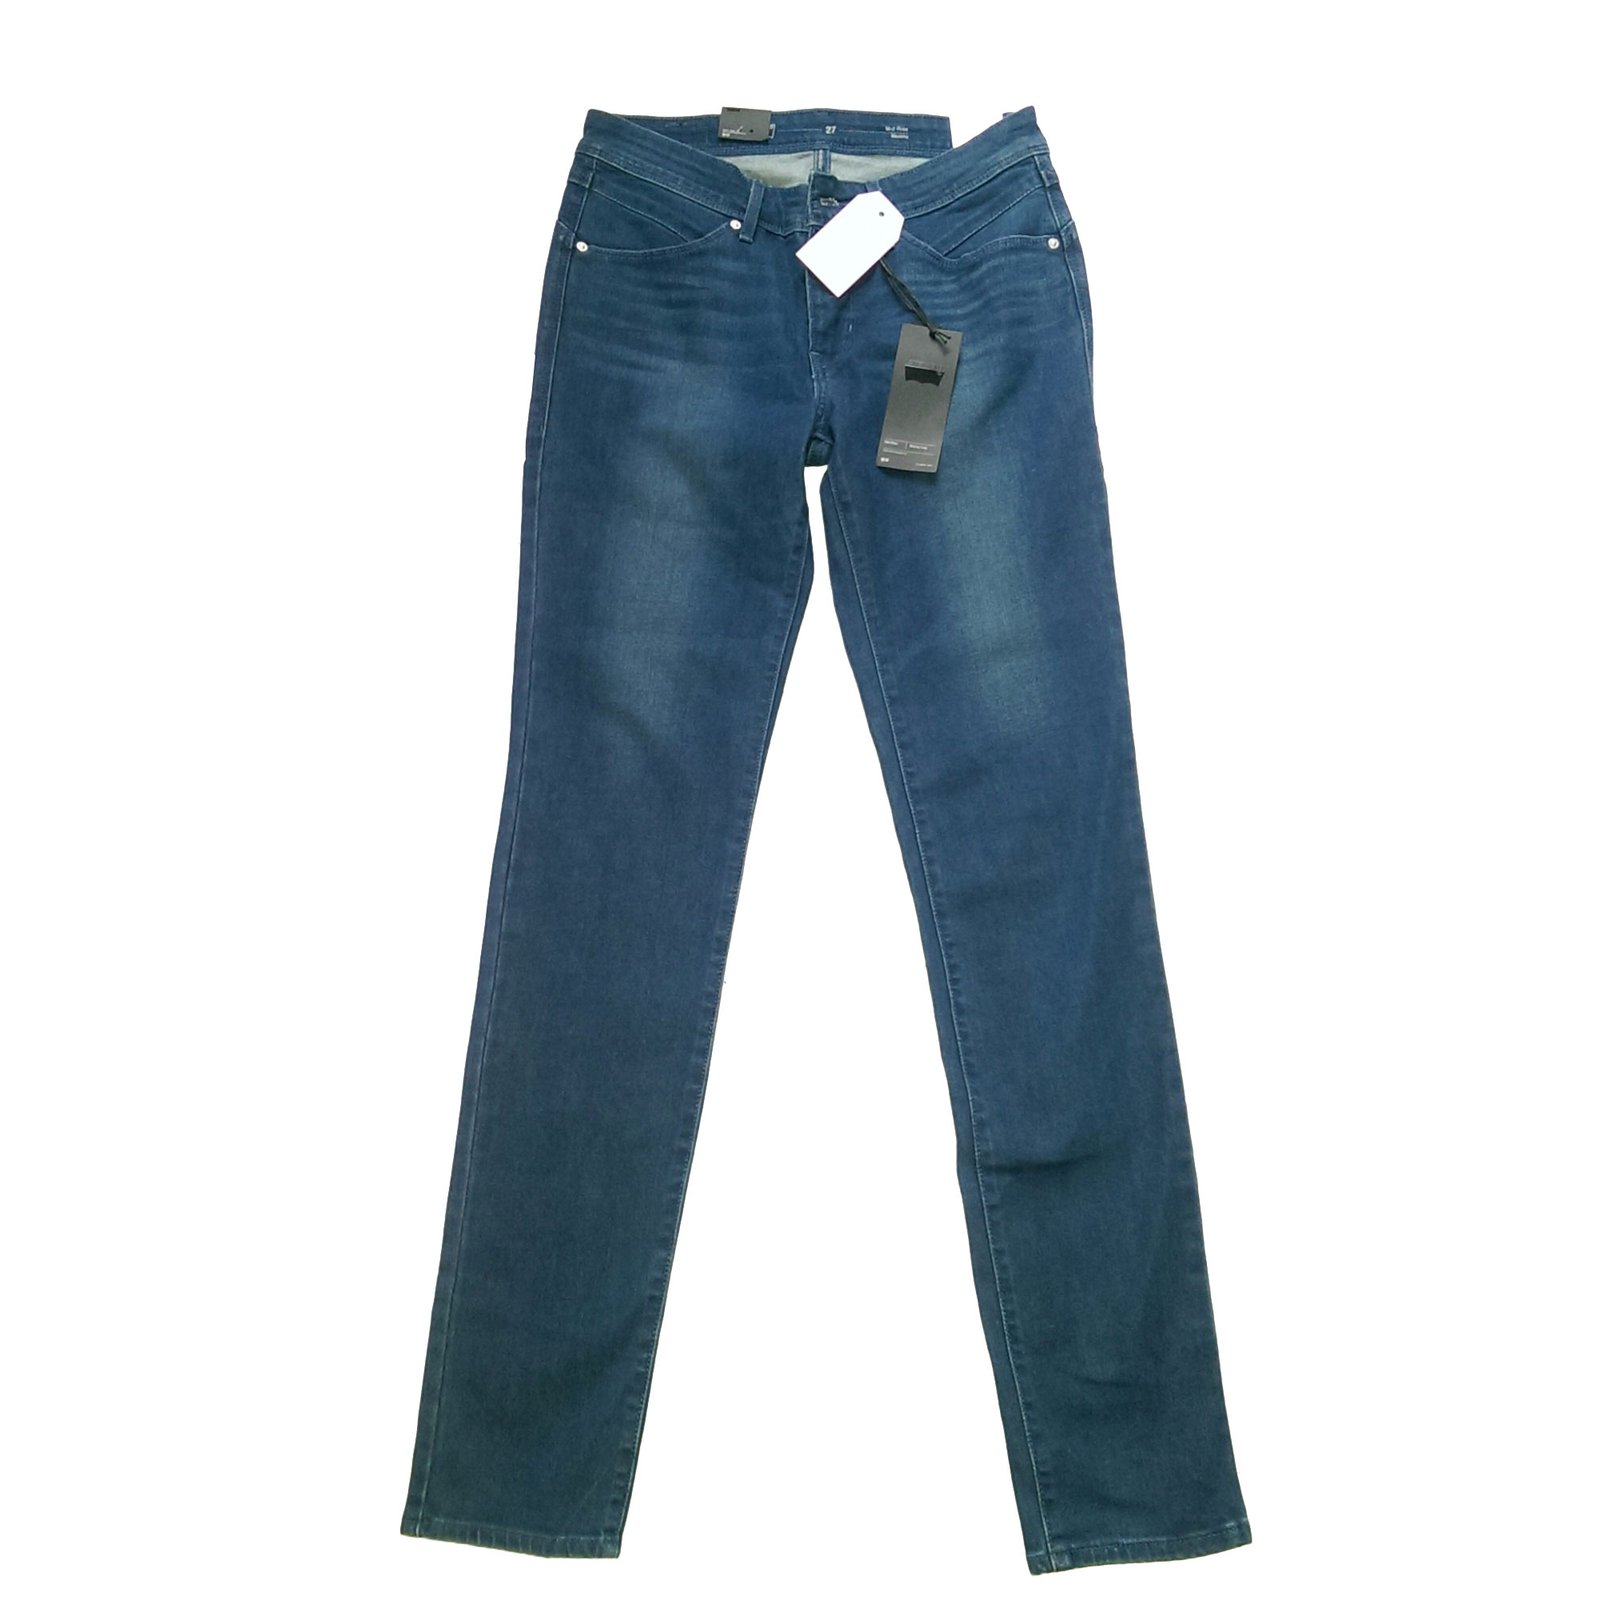 levi's jeans with elastane